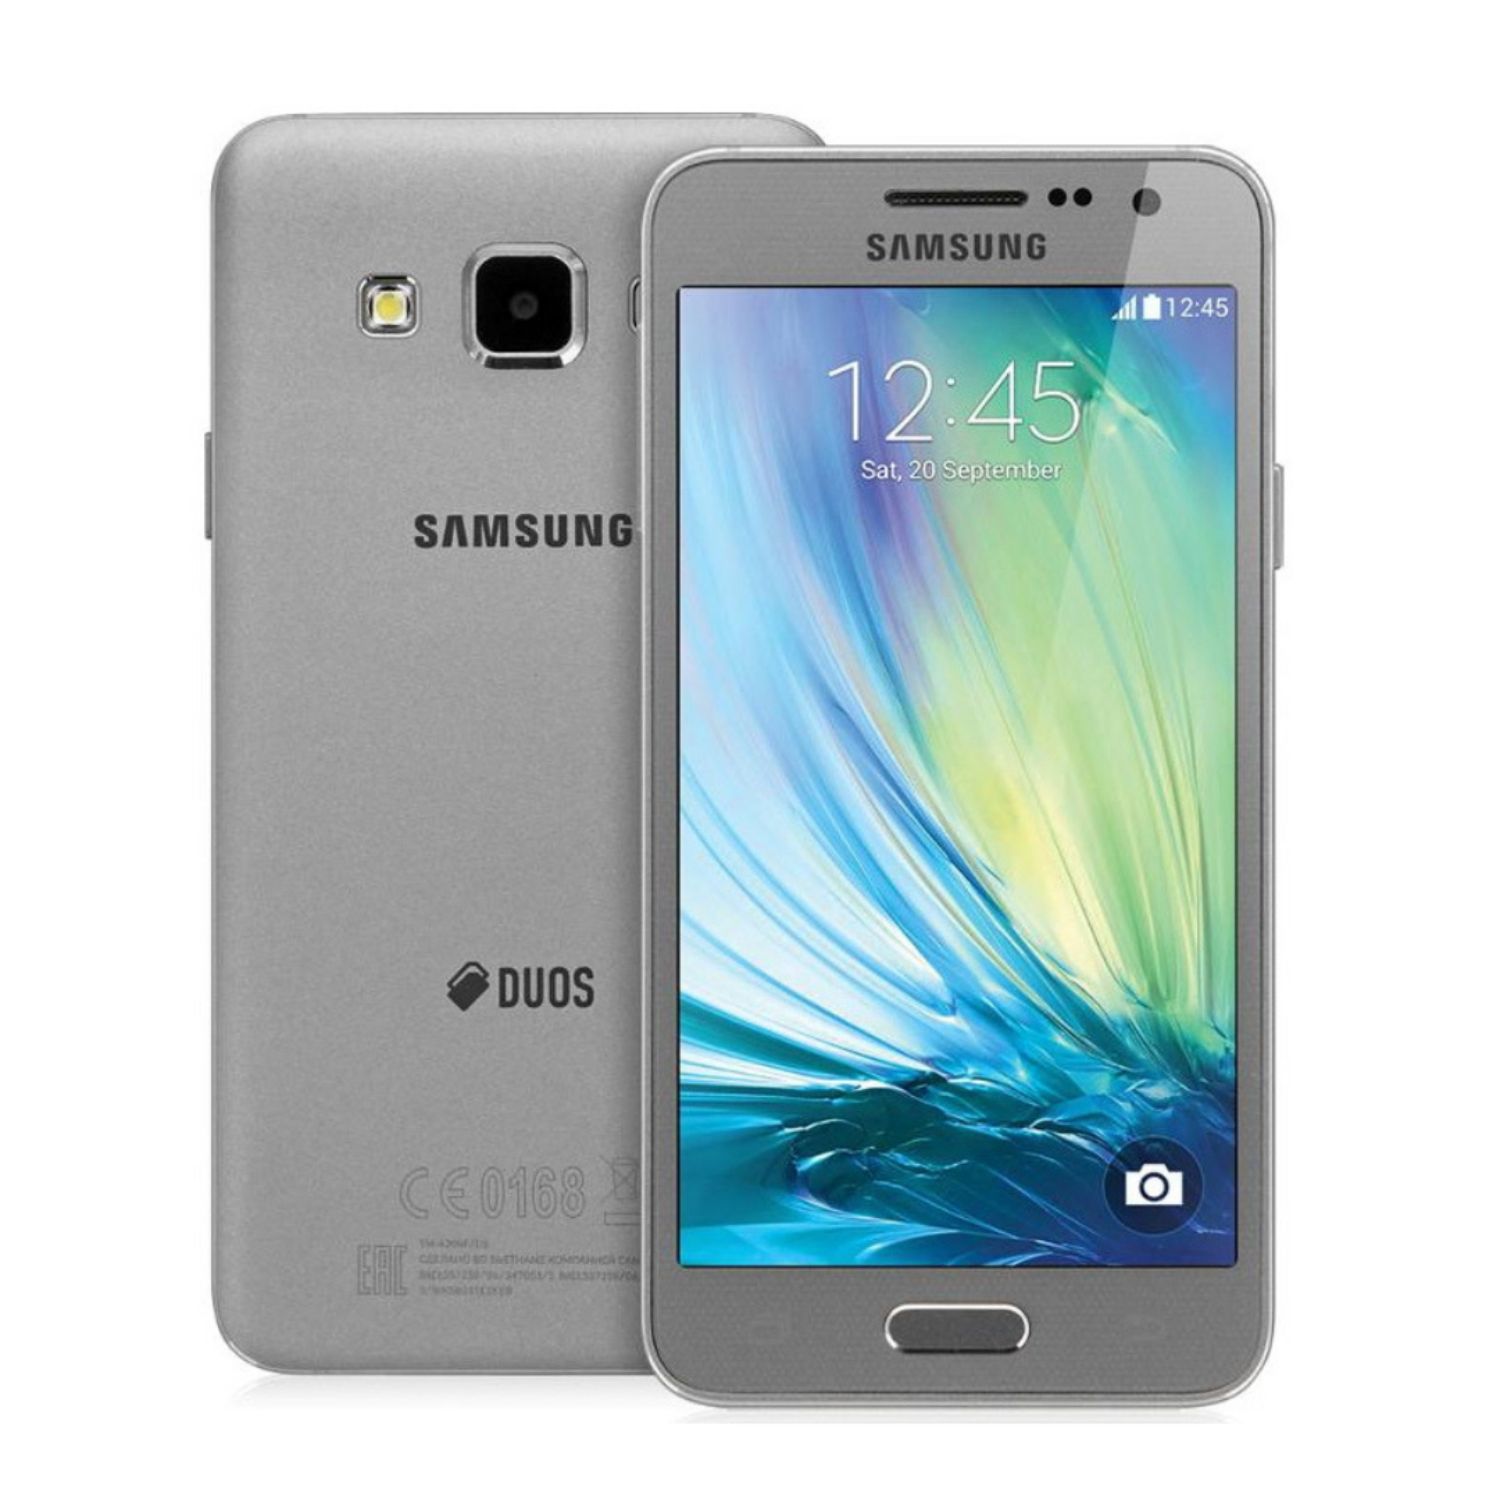 A5 gold. Samsung Galaxy a3. Samsung a300 Galaxy a3. Samsung a5 2014. Samsung a3 2015.